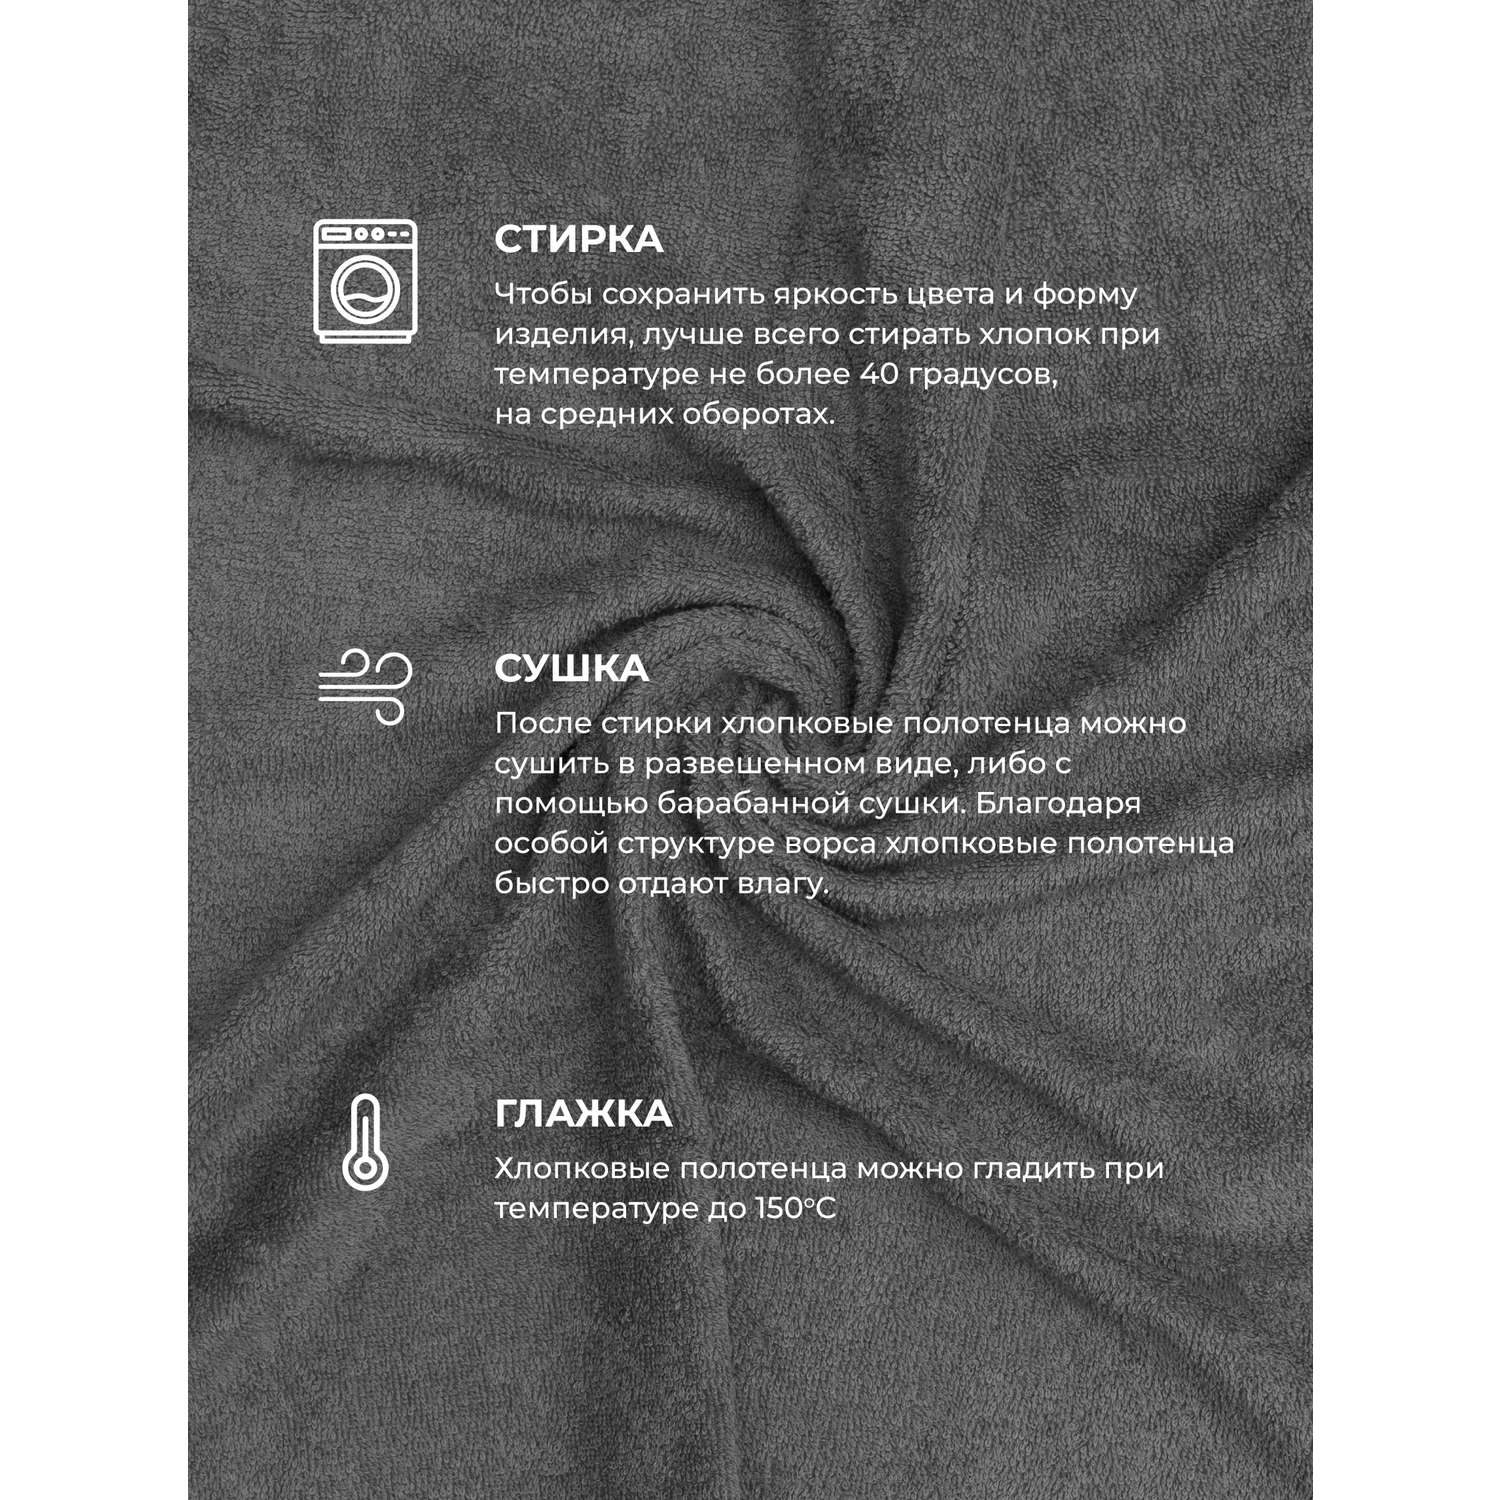 Набор махровых полотенец Unifico Nature графит набор из 3 шт.:30х60-1и 50х80-1и70х130-1 - фото 8